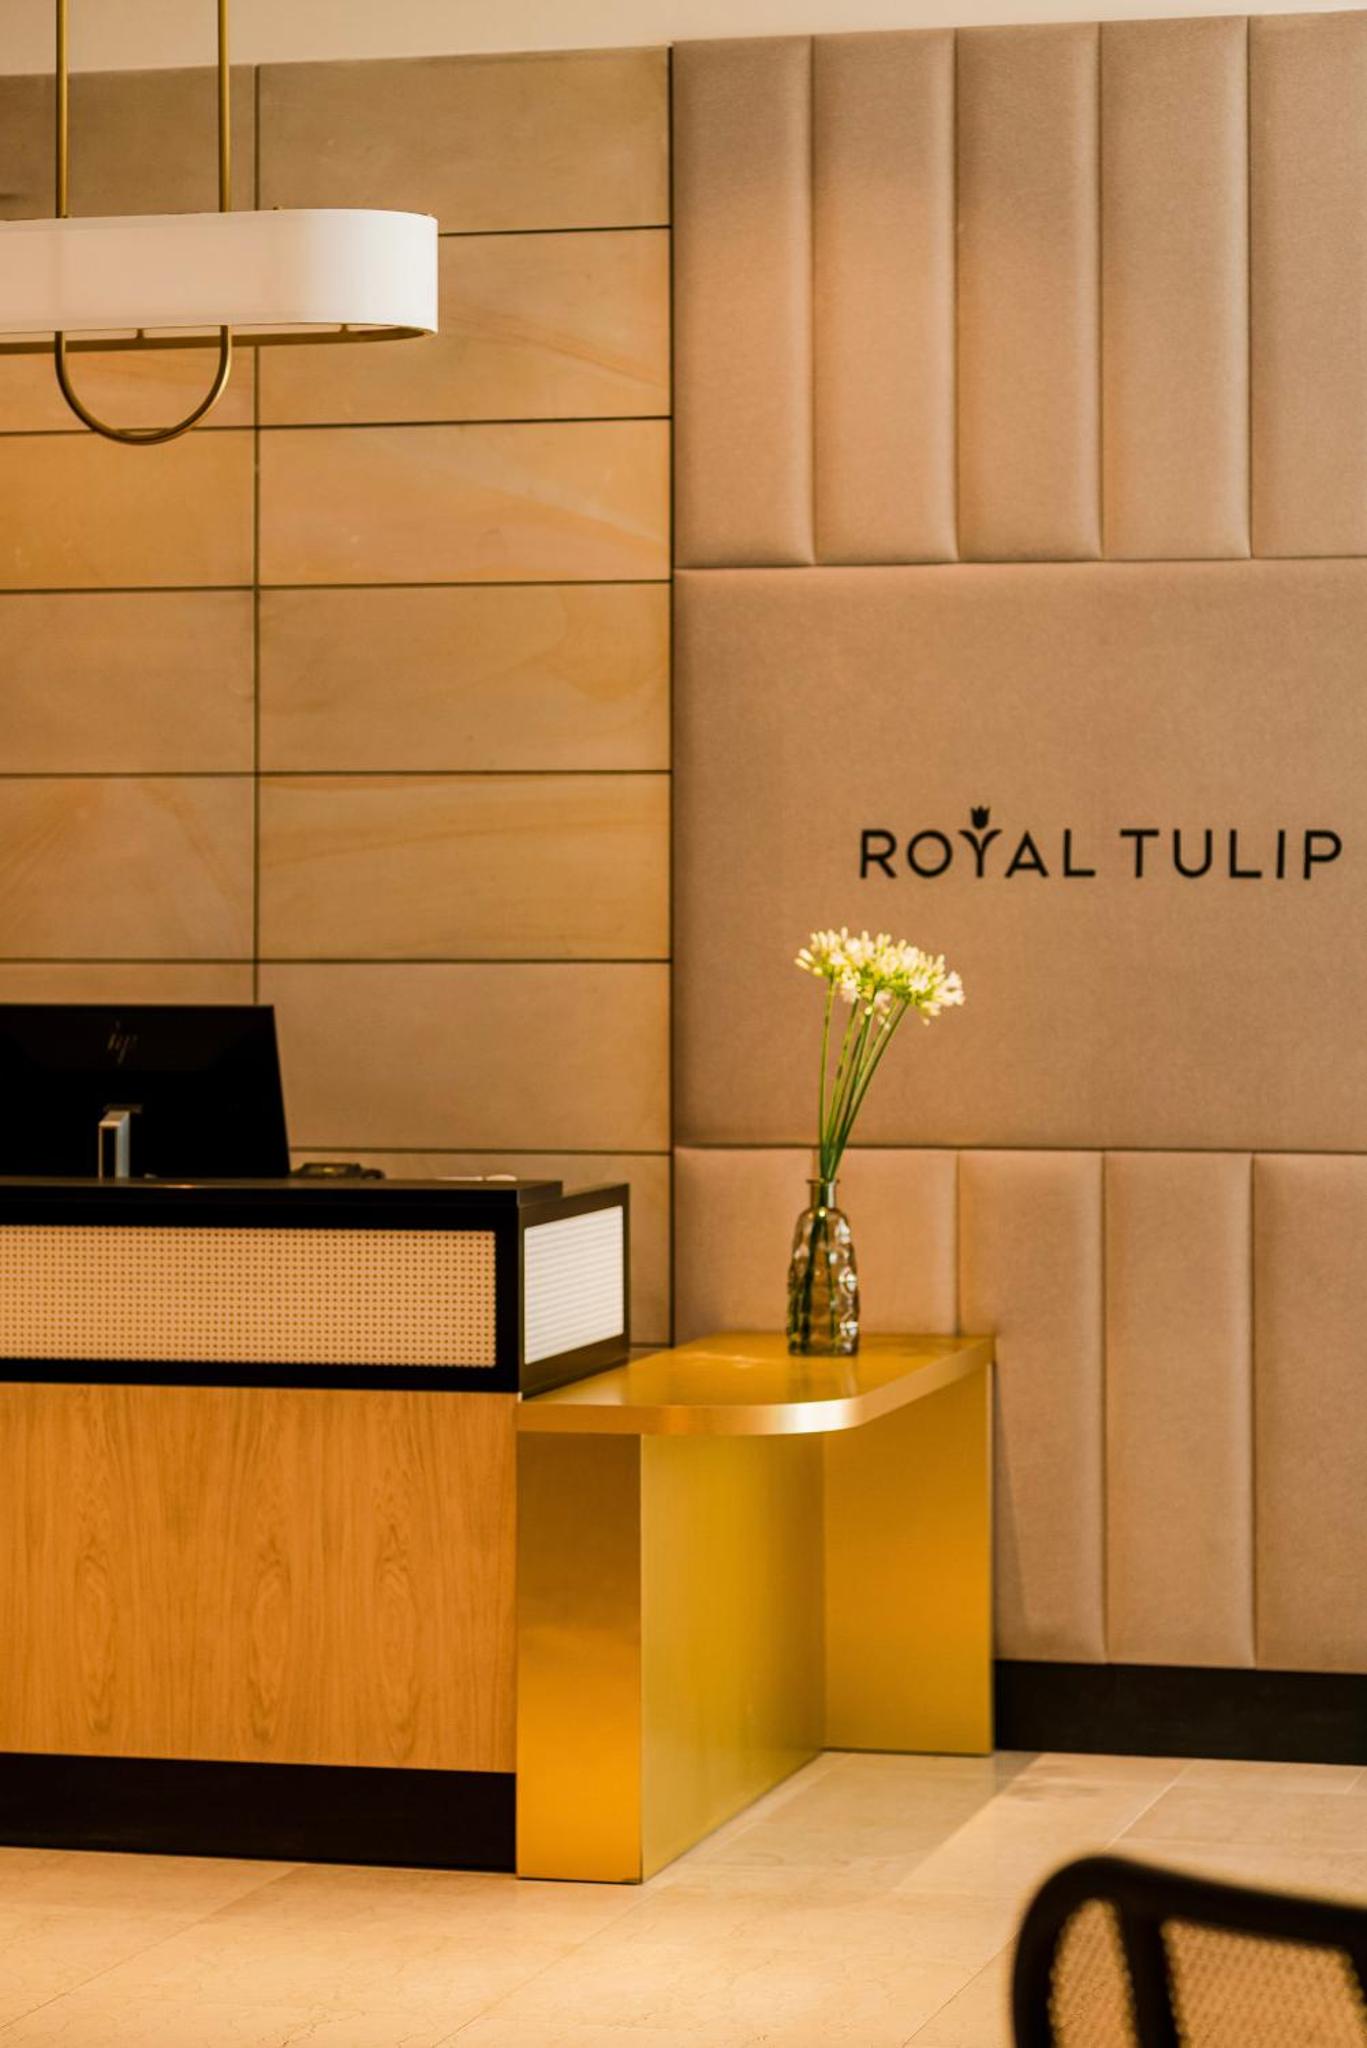 Royal Tulip Sand Hotel